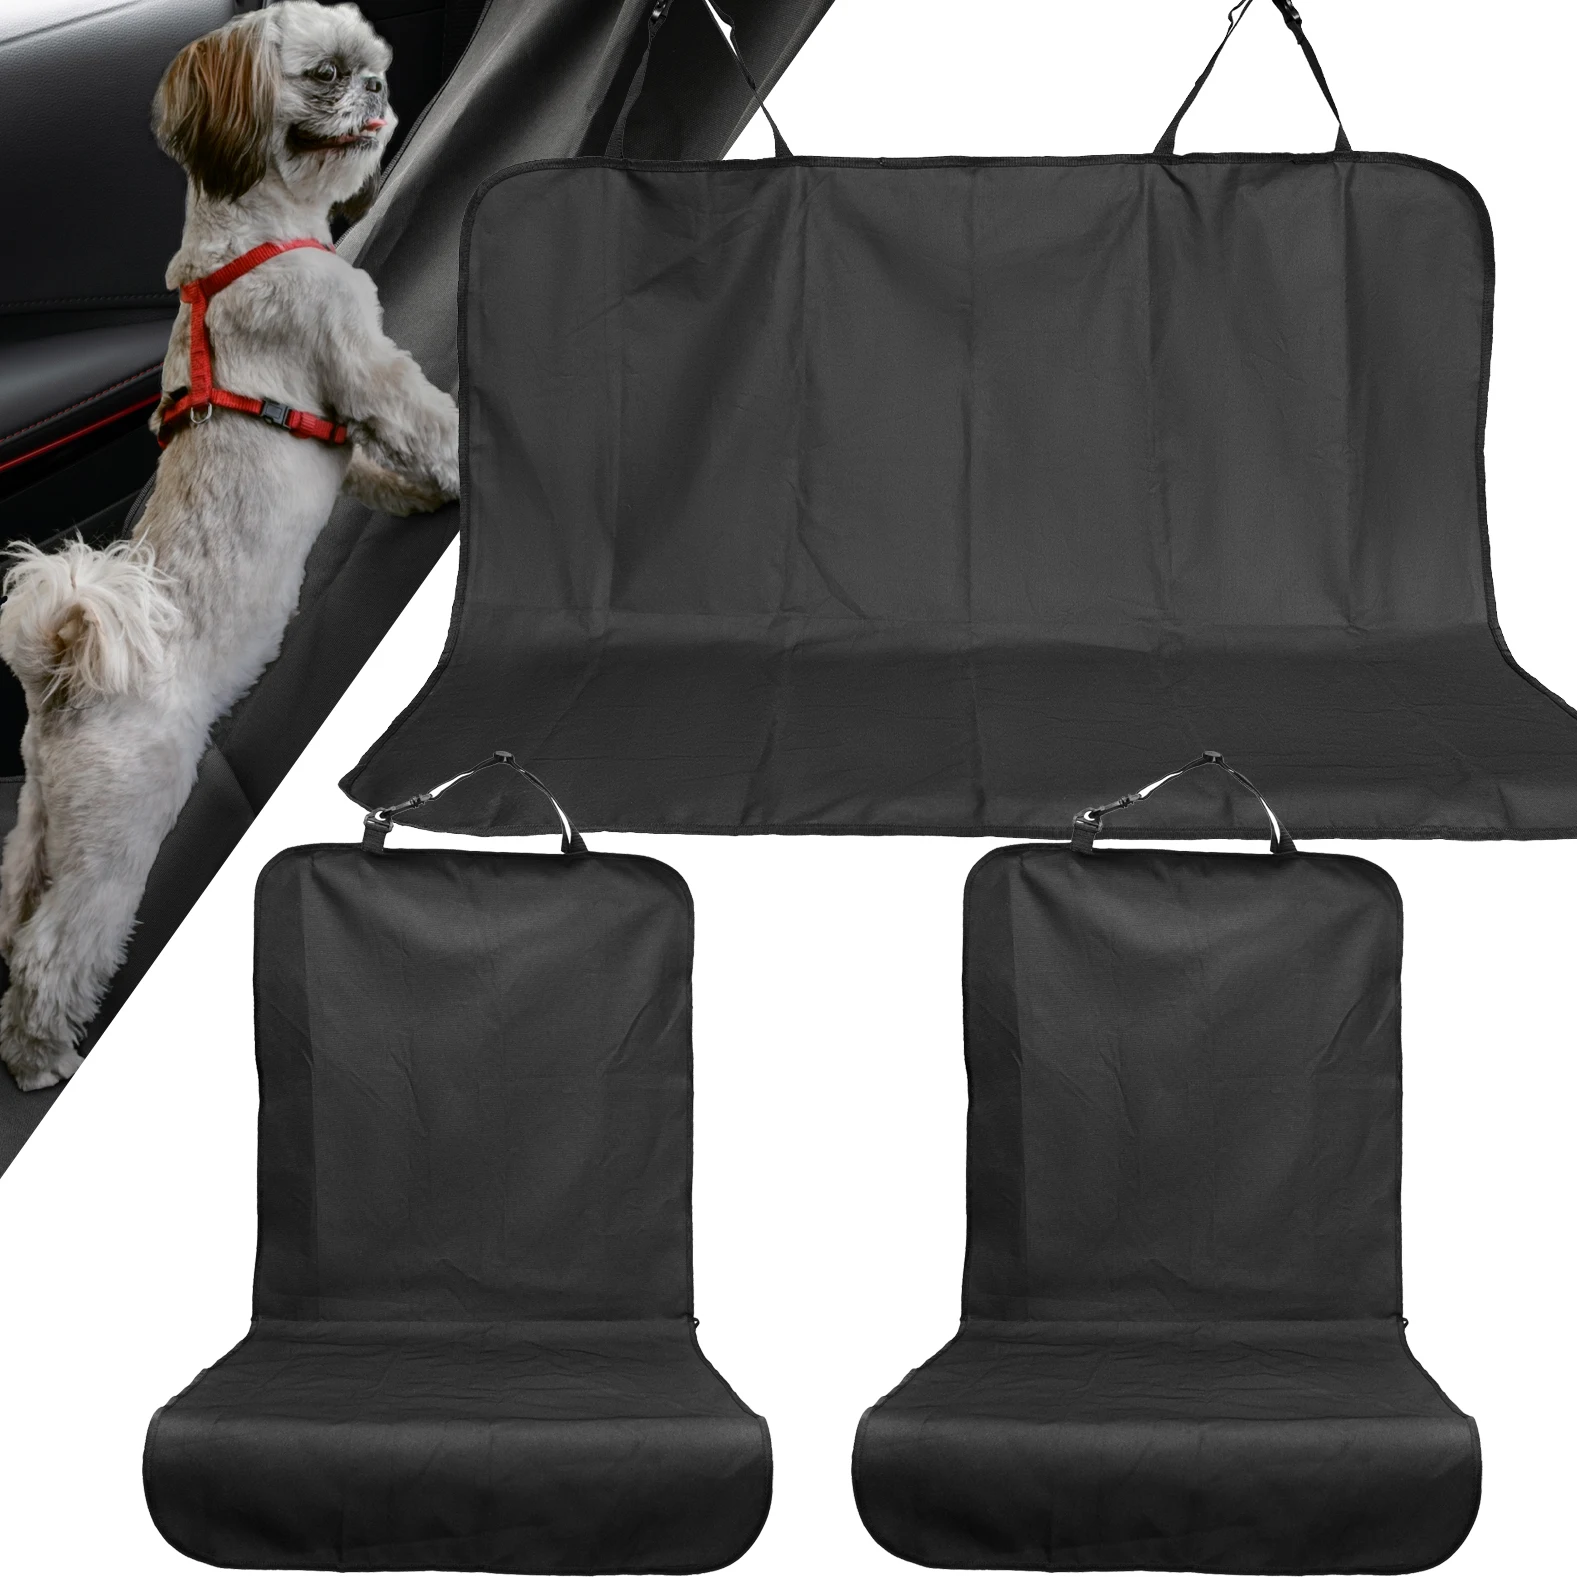 G car seat cover waterproof pet travel dog carrier hammock car rear back seat protector thumb200